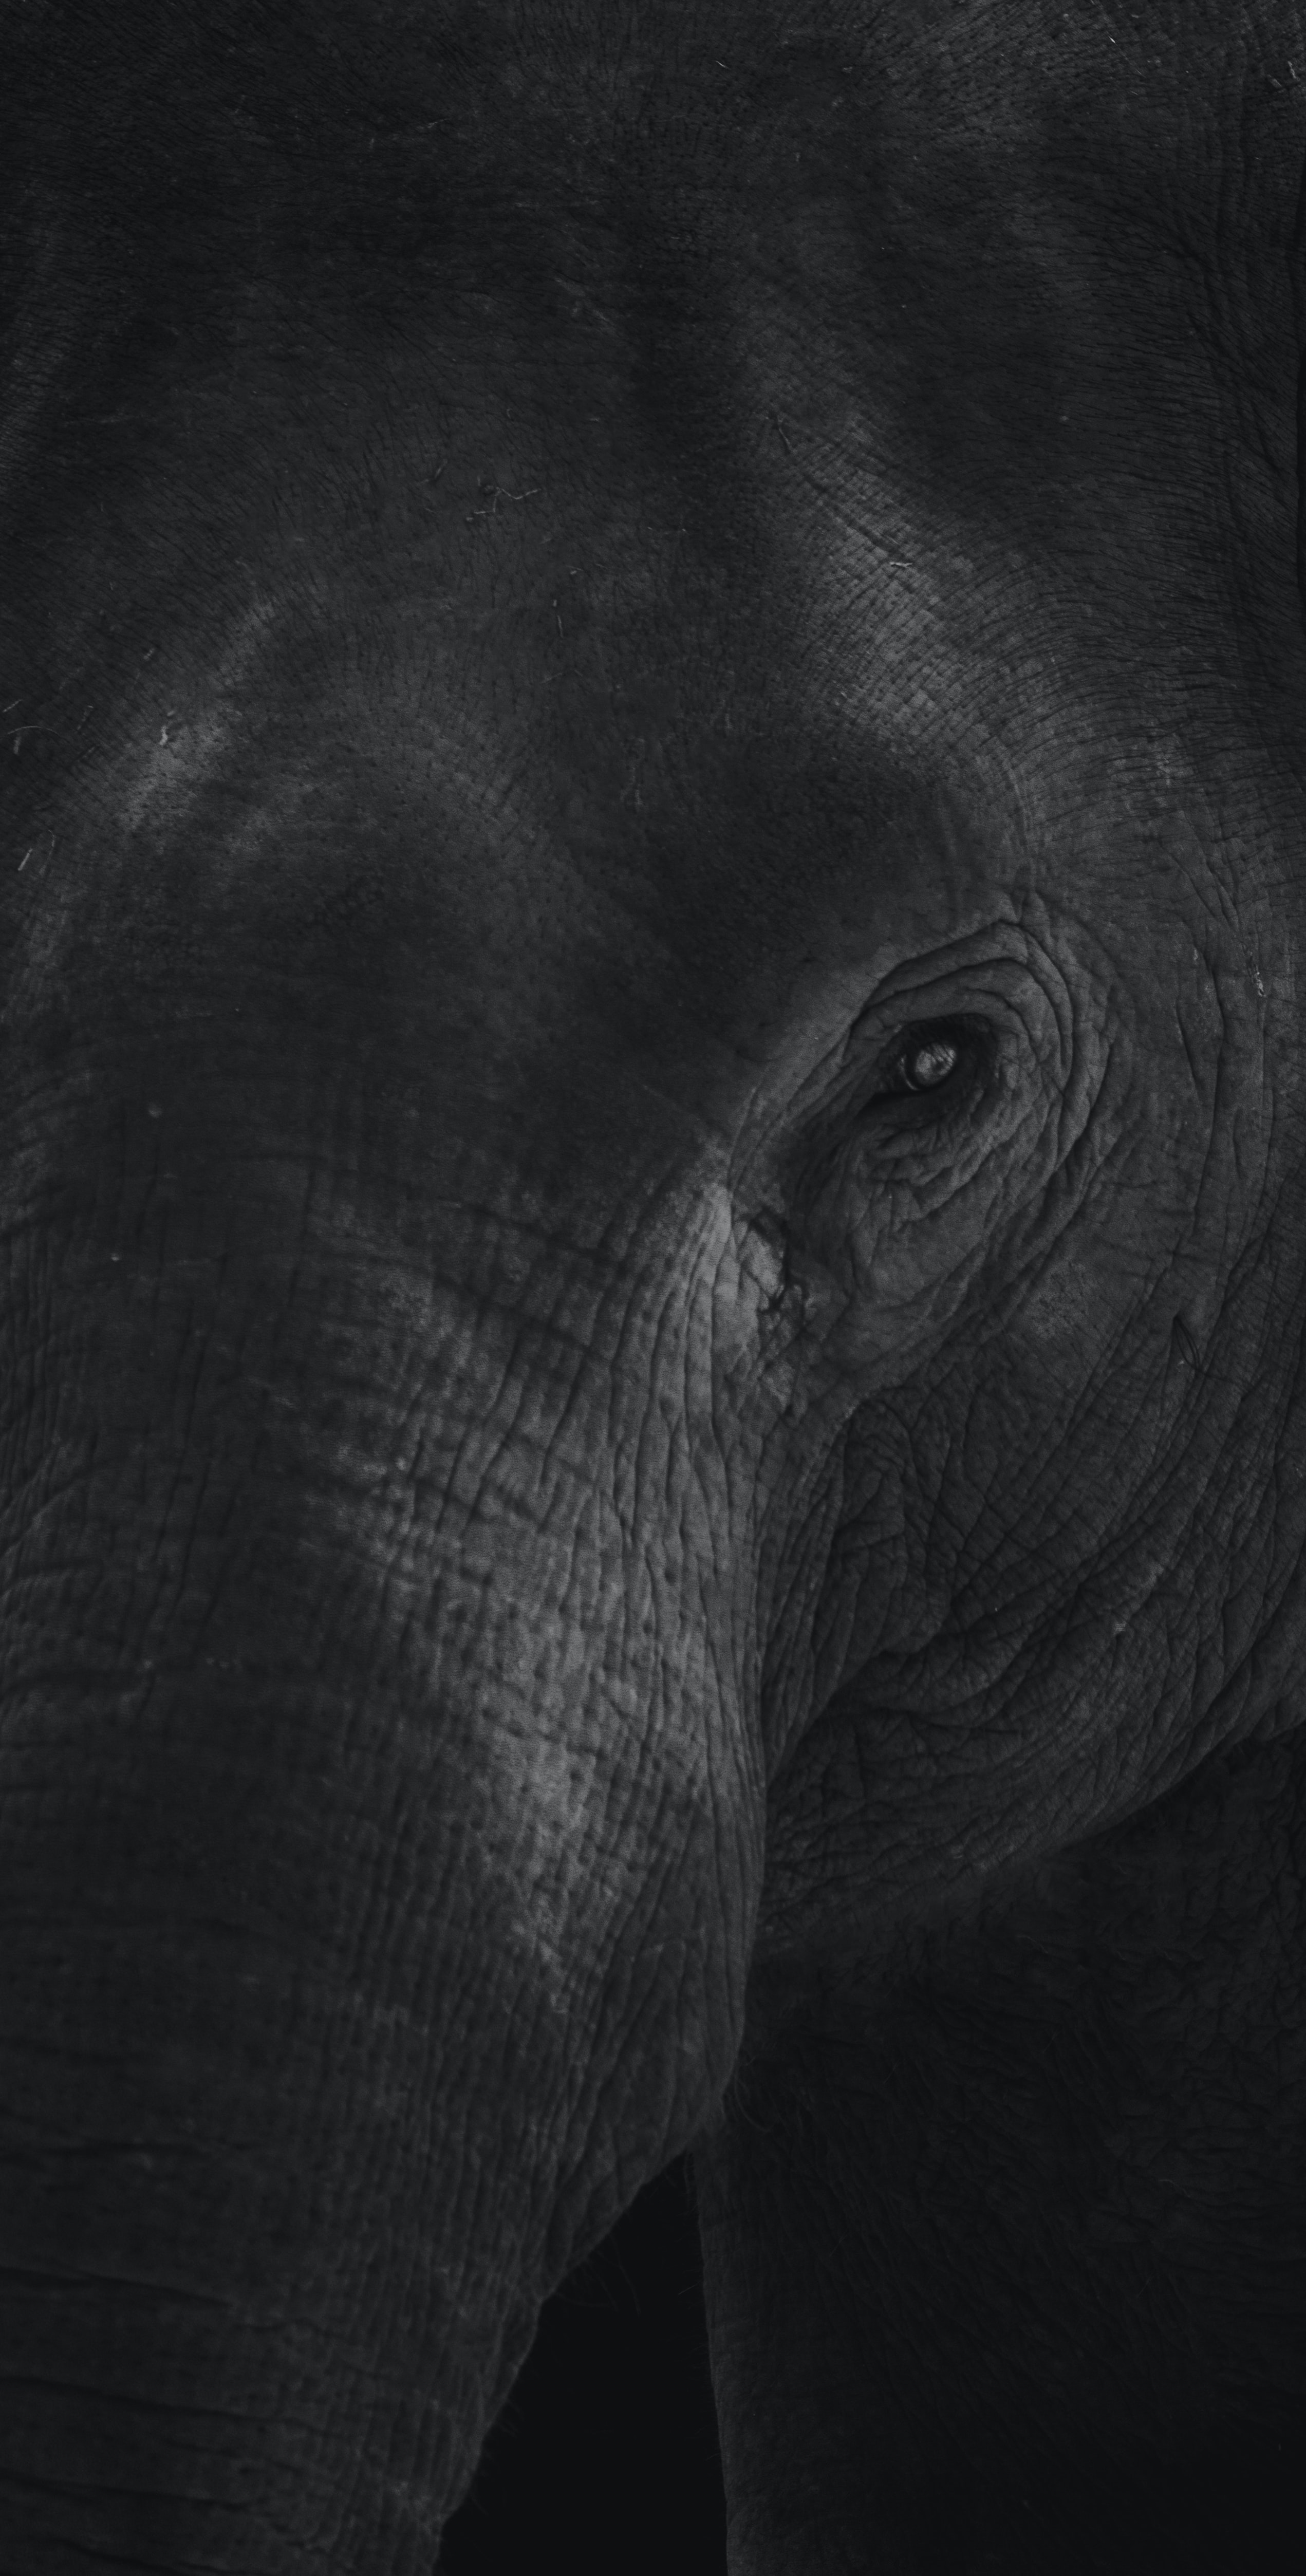 Elephant wallpaper hd 1080p. | Elephant images, Elephant life, Elephant